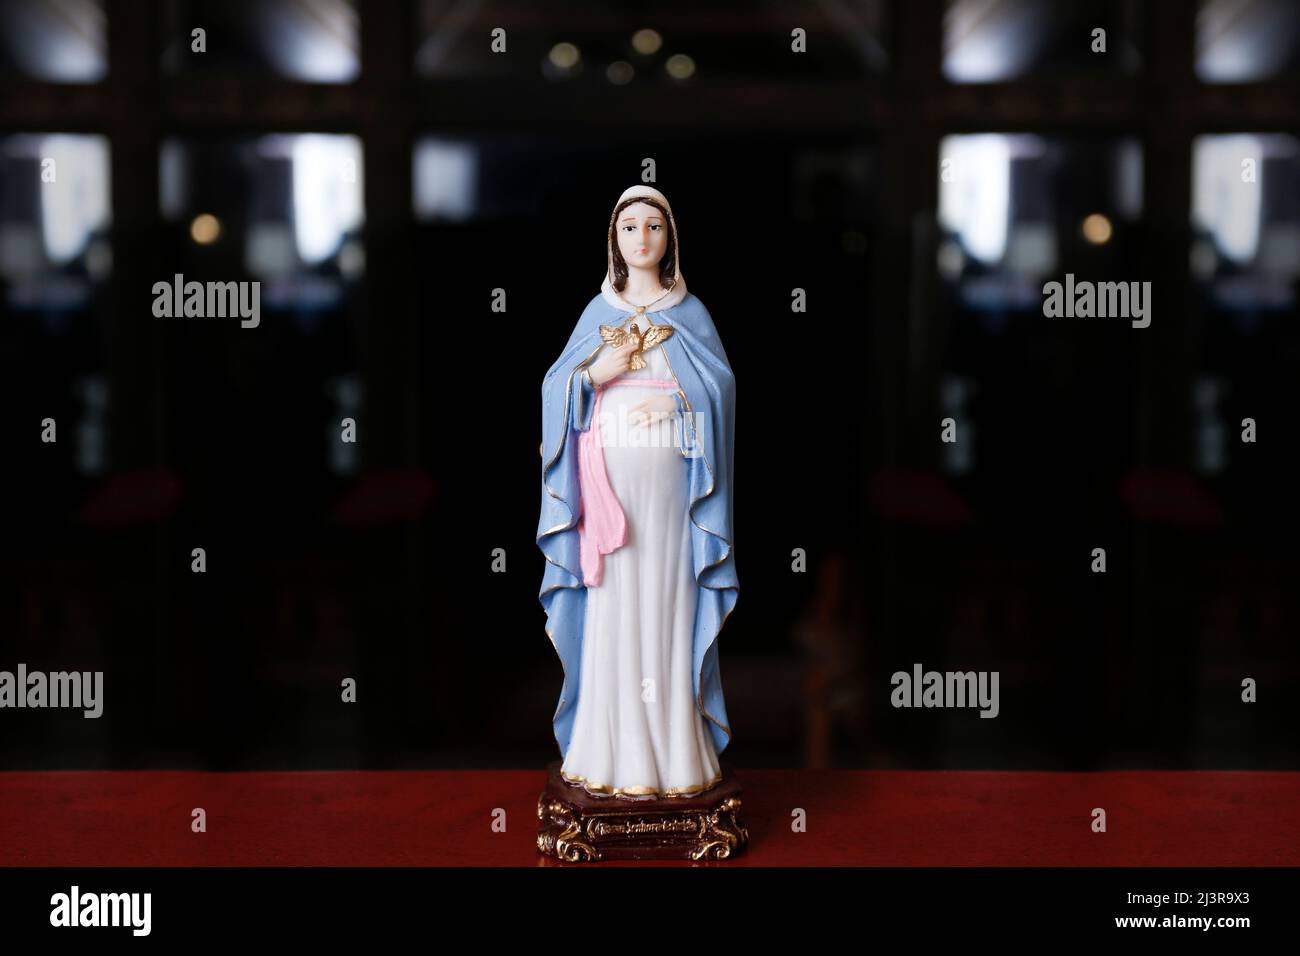 Statue des Bildes unserer Schwangeren, 'Nossa Senhora Gravida', 'Nossa Senhora do O' - Erwartung Stockfoto